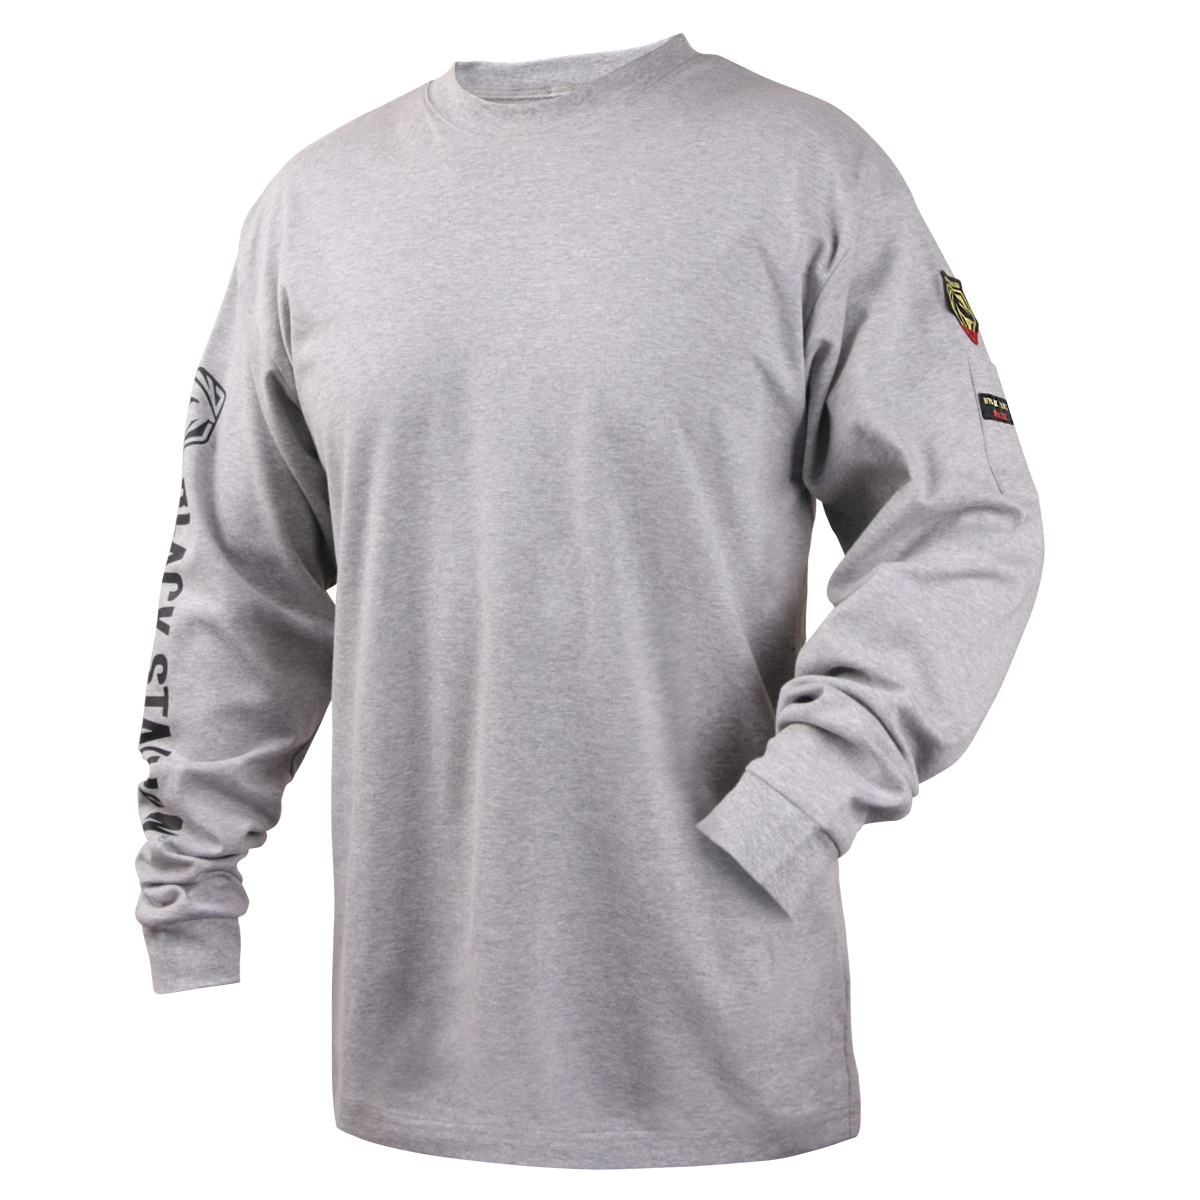 Black Stallion® TF2510-GY-XLG TF2510-GY Long Sleeve T-Shirt, Men's, XL, Heather Gray, Cotton Jersey Knit